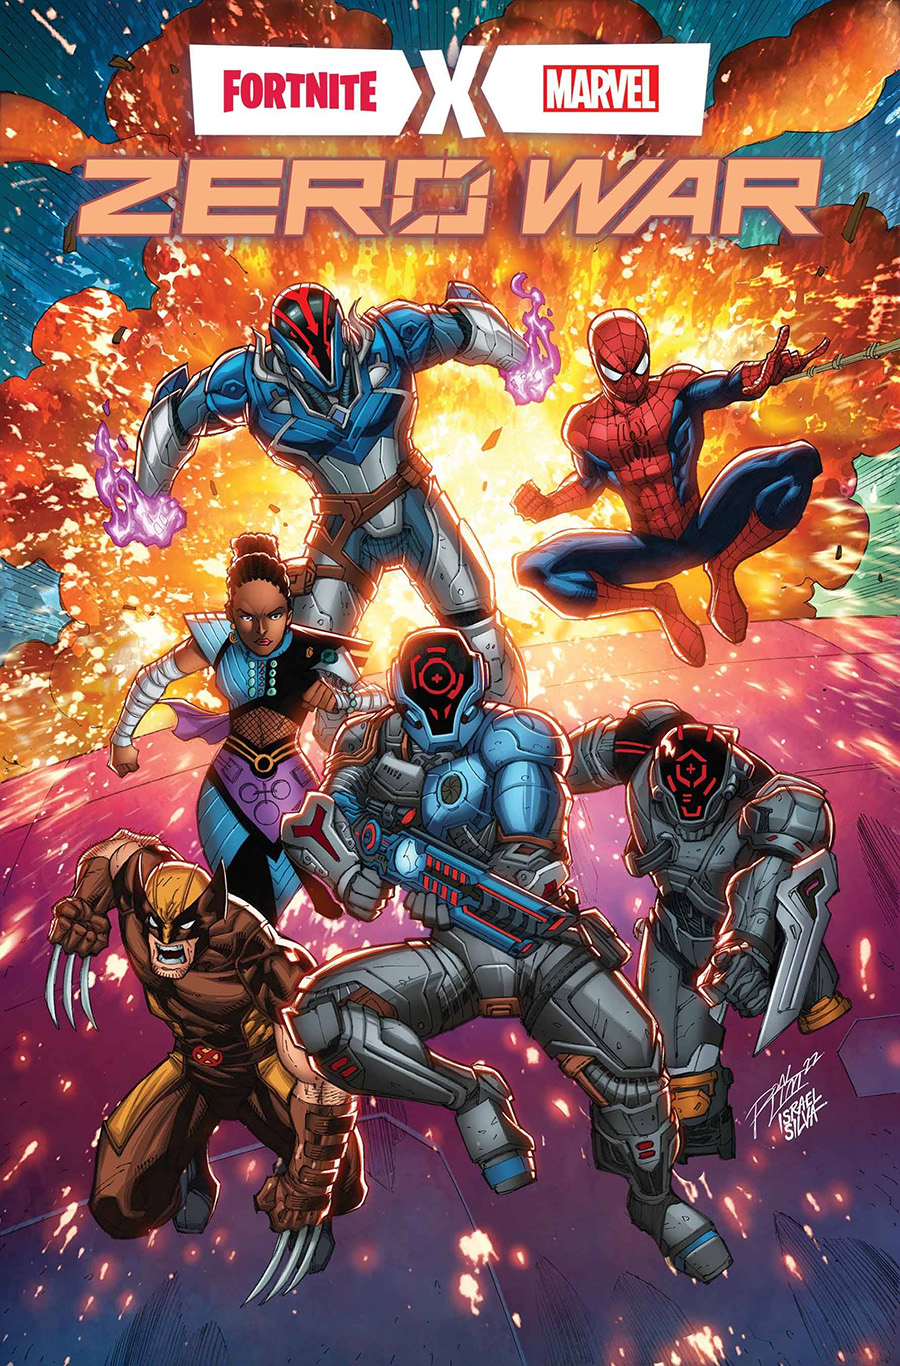 Fortnite x Marvel Zero War #1 Cover D Variant Ron Lim Cover (Limit 1 Per Customer)